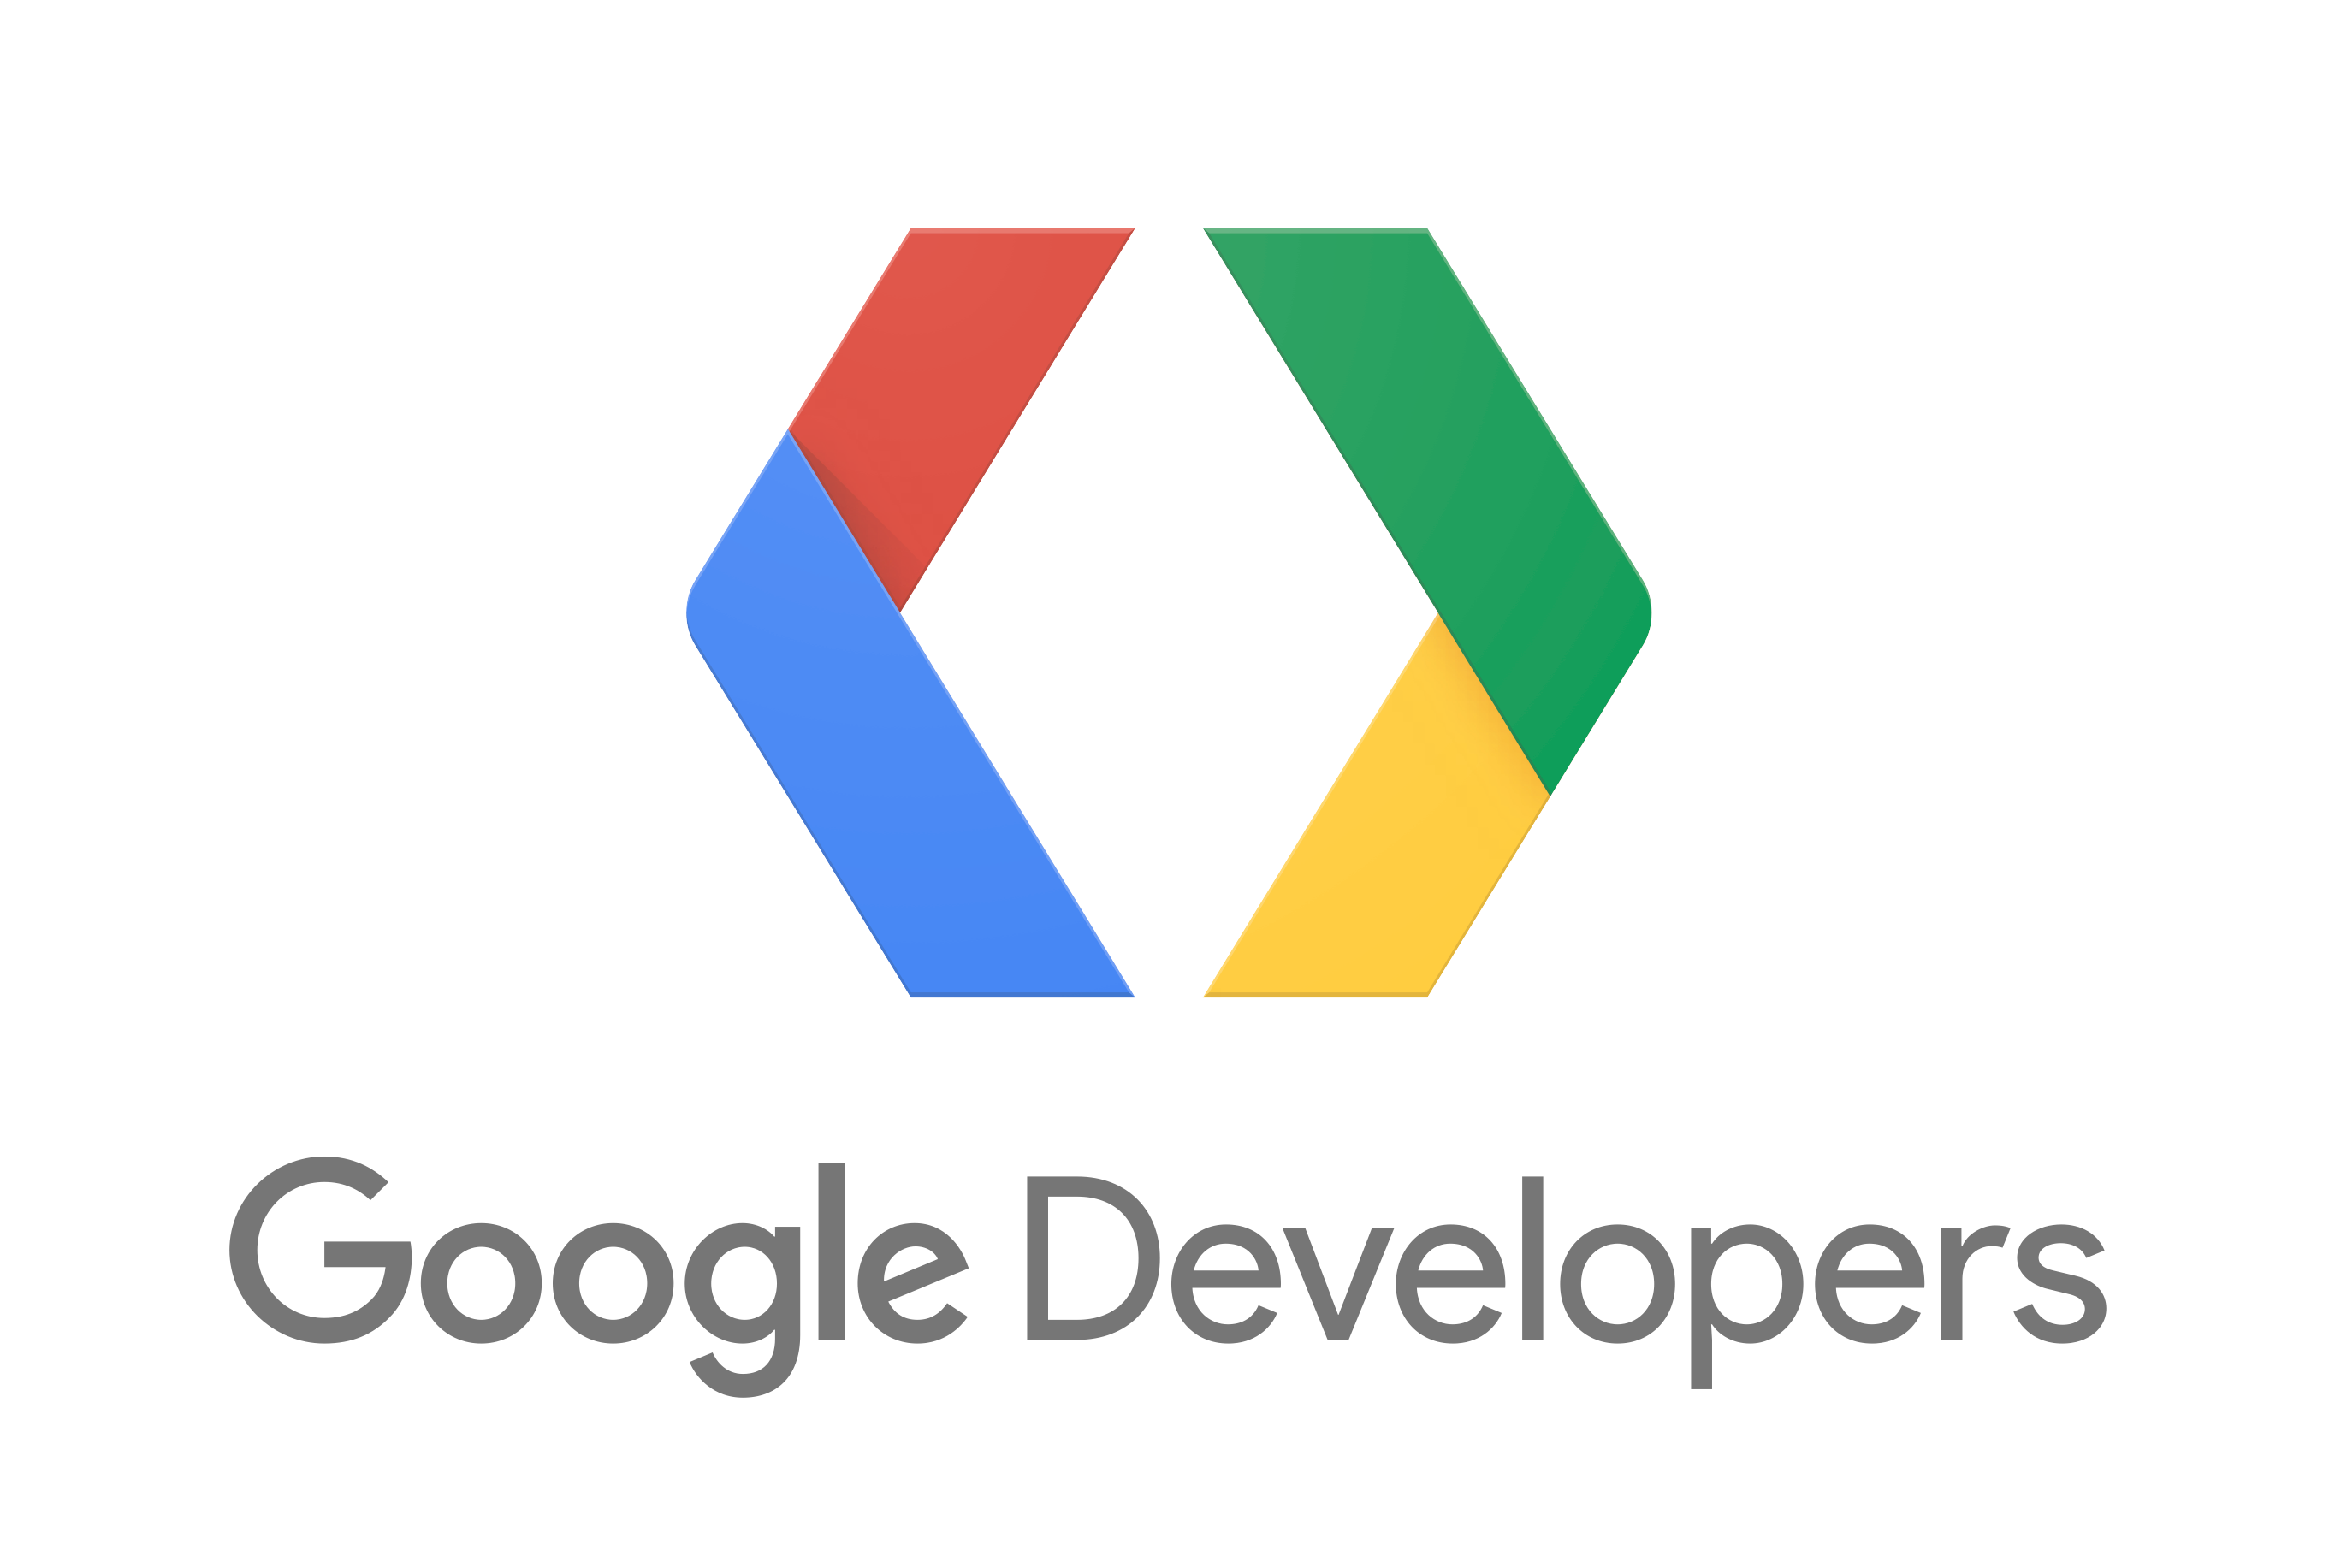 Google Developers daLDHALDHAL